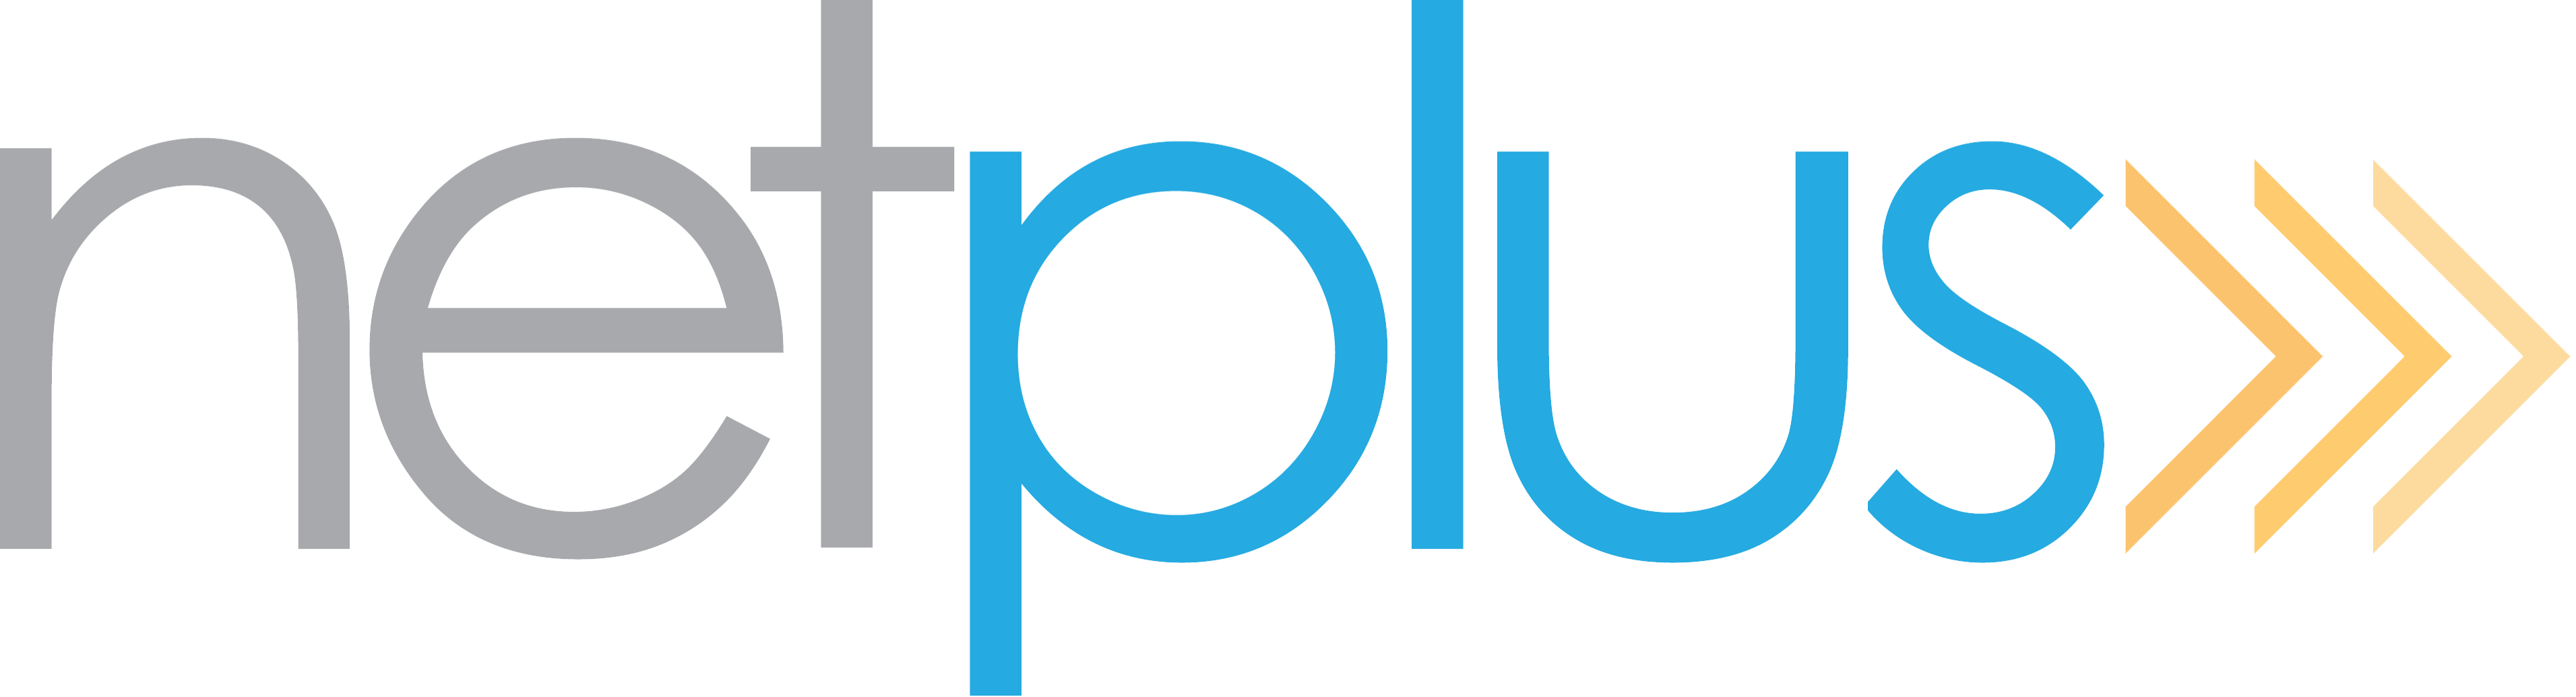 Gyrus Company Logo